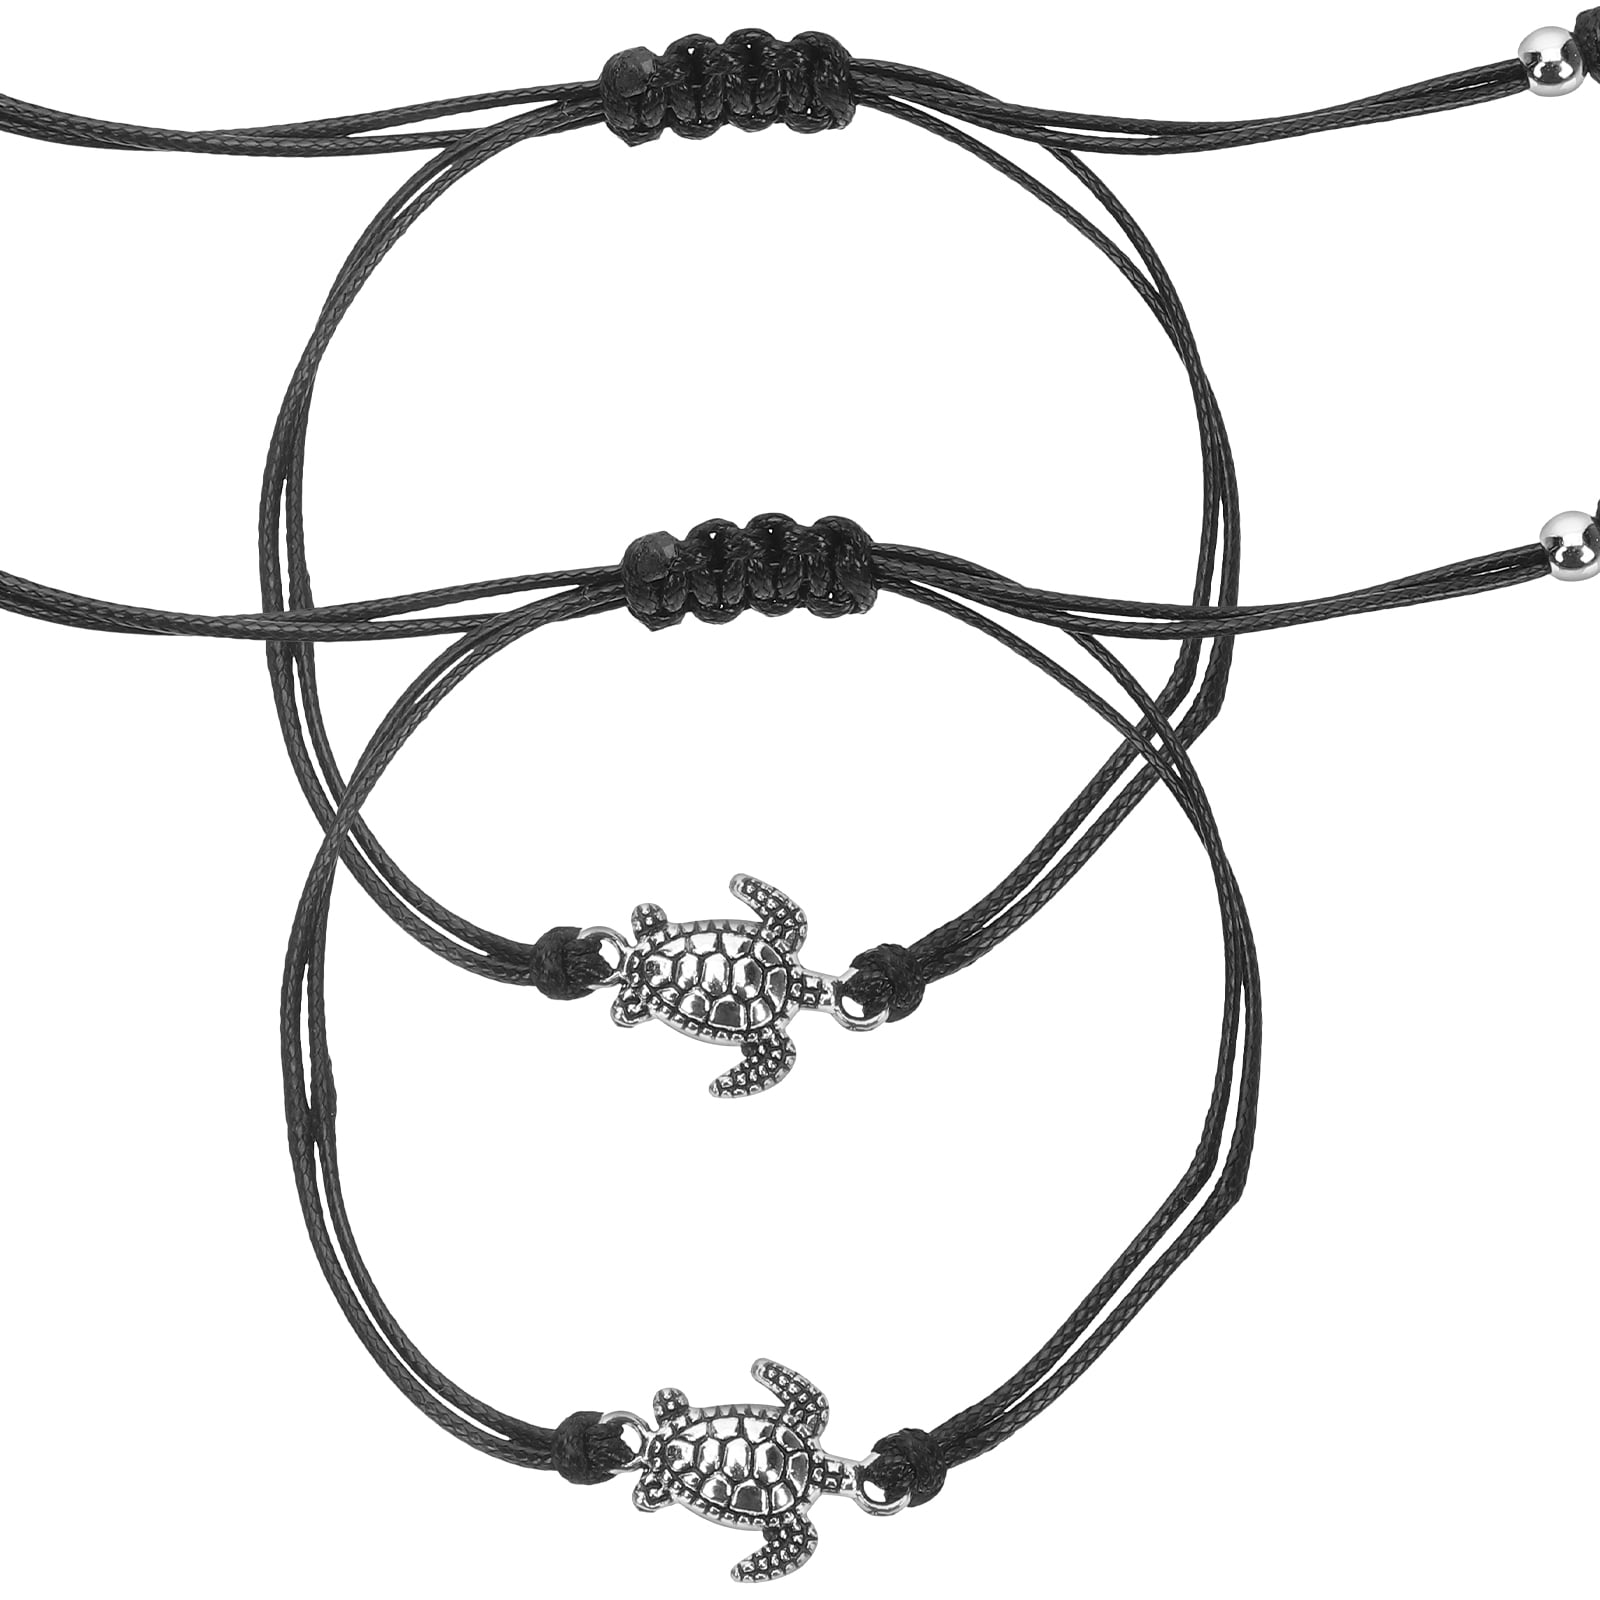 Fablinks 12 Adjustable Rope Bracelets for Women and Men, Round